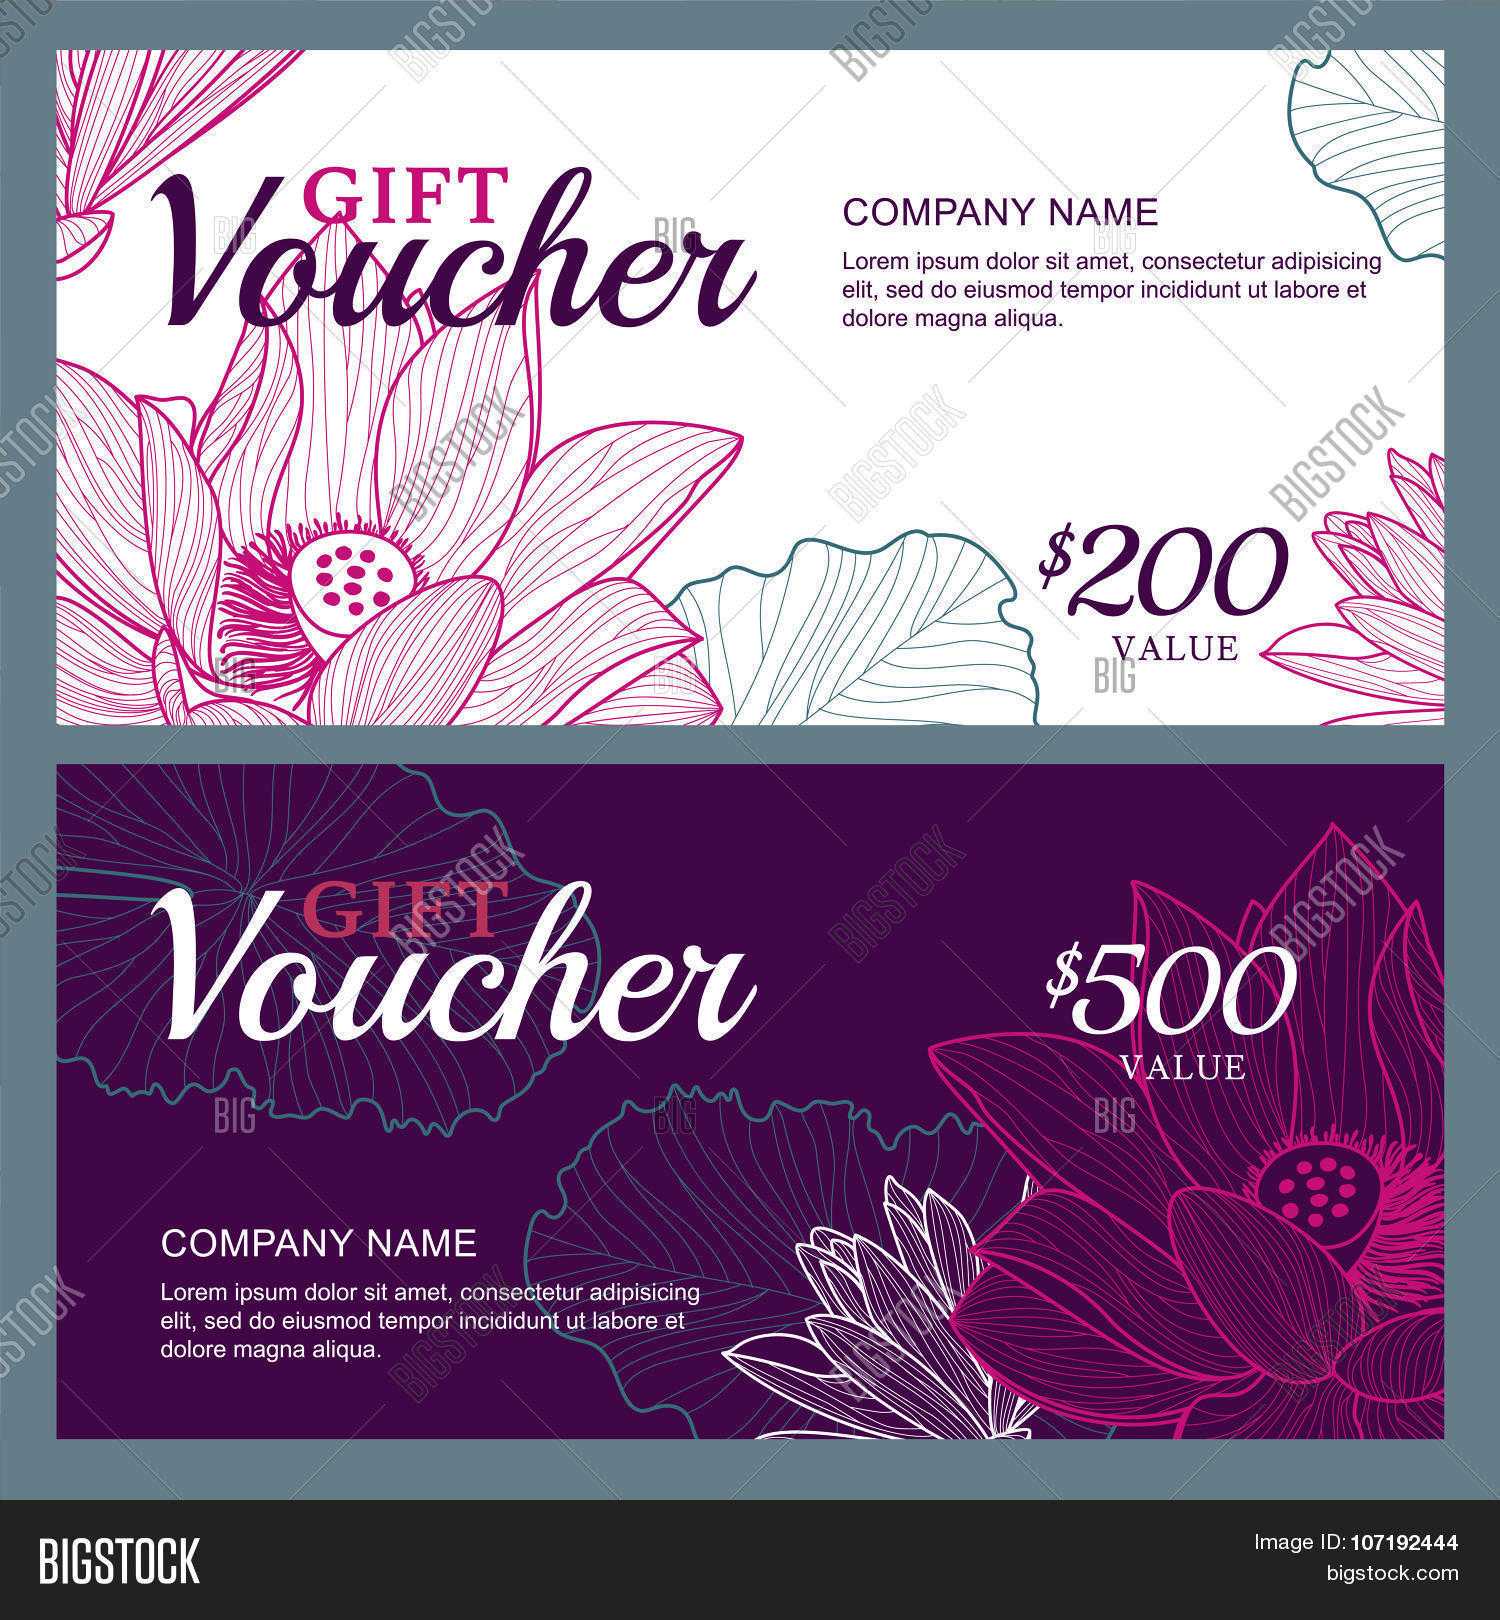 Vector Gift Voucher Vector & Photo (Free Trial) | Bigstock In Salon Gift Certificate Template